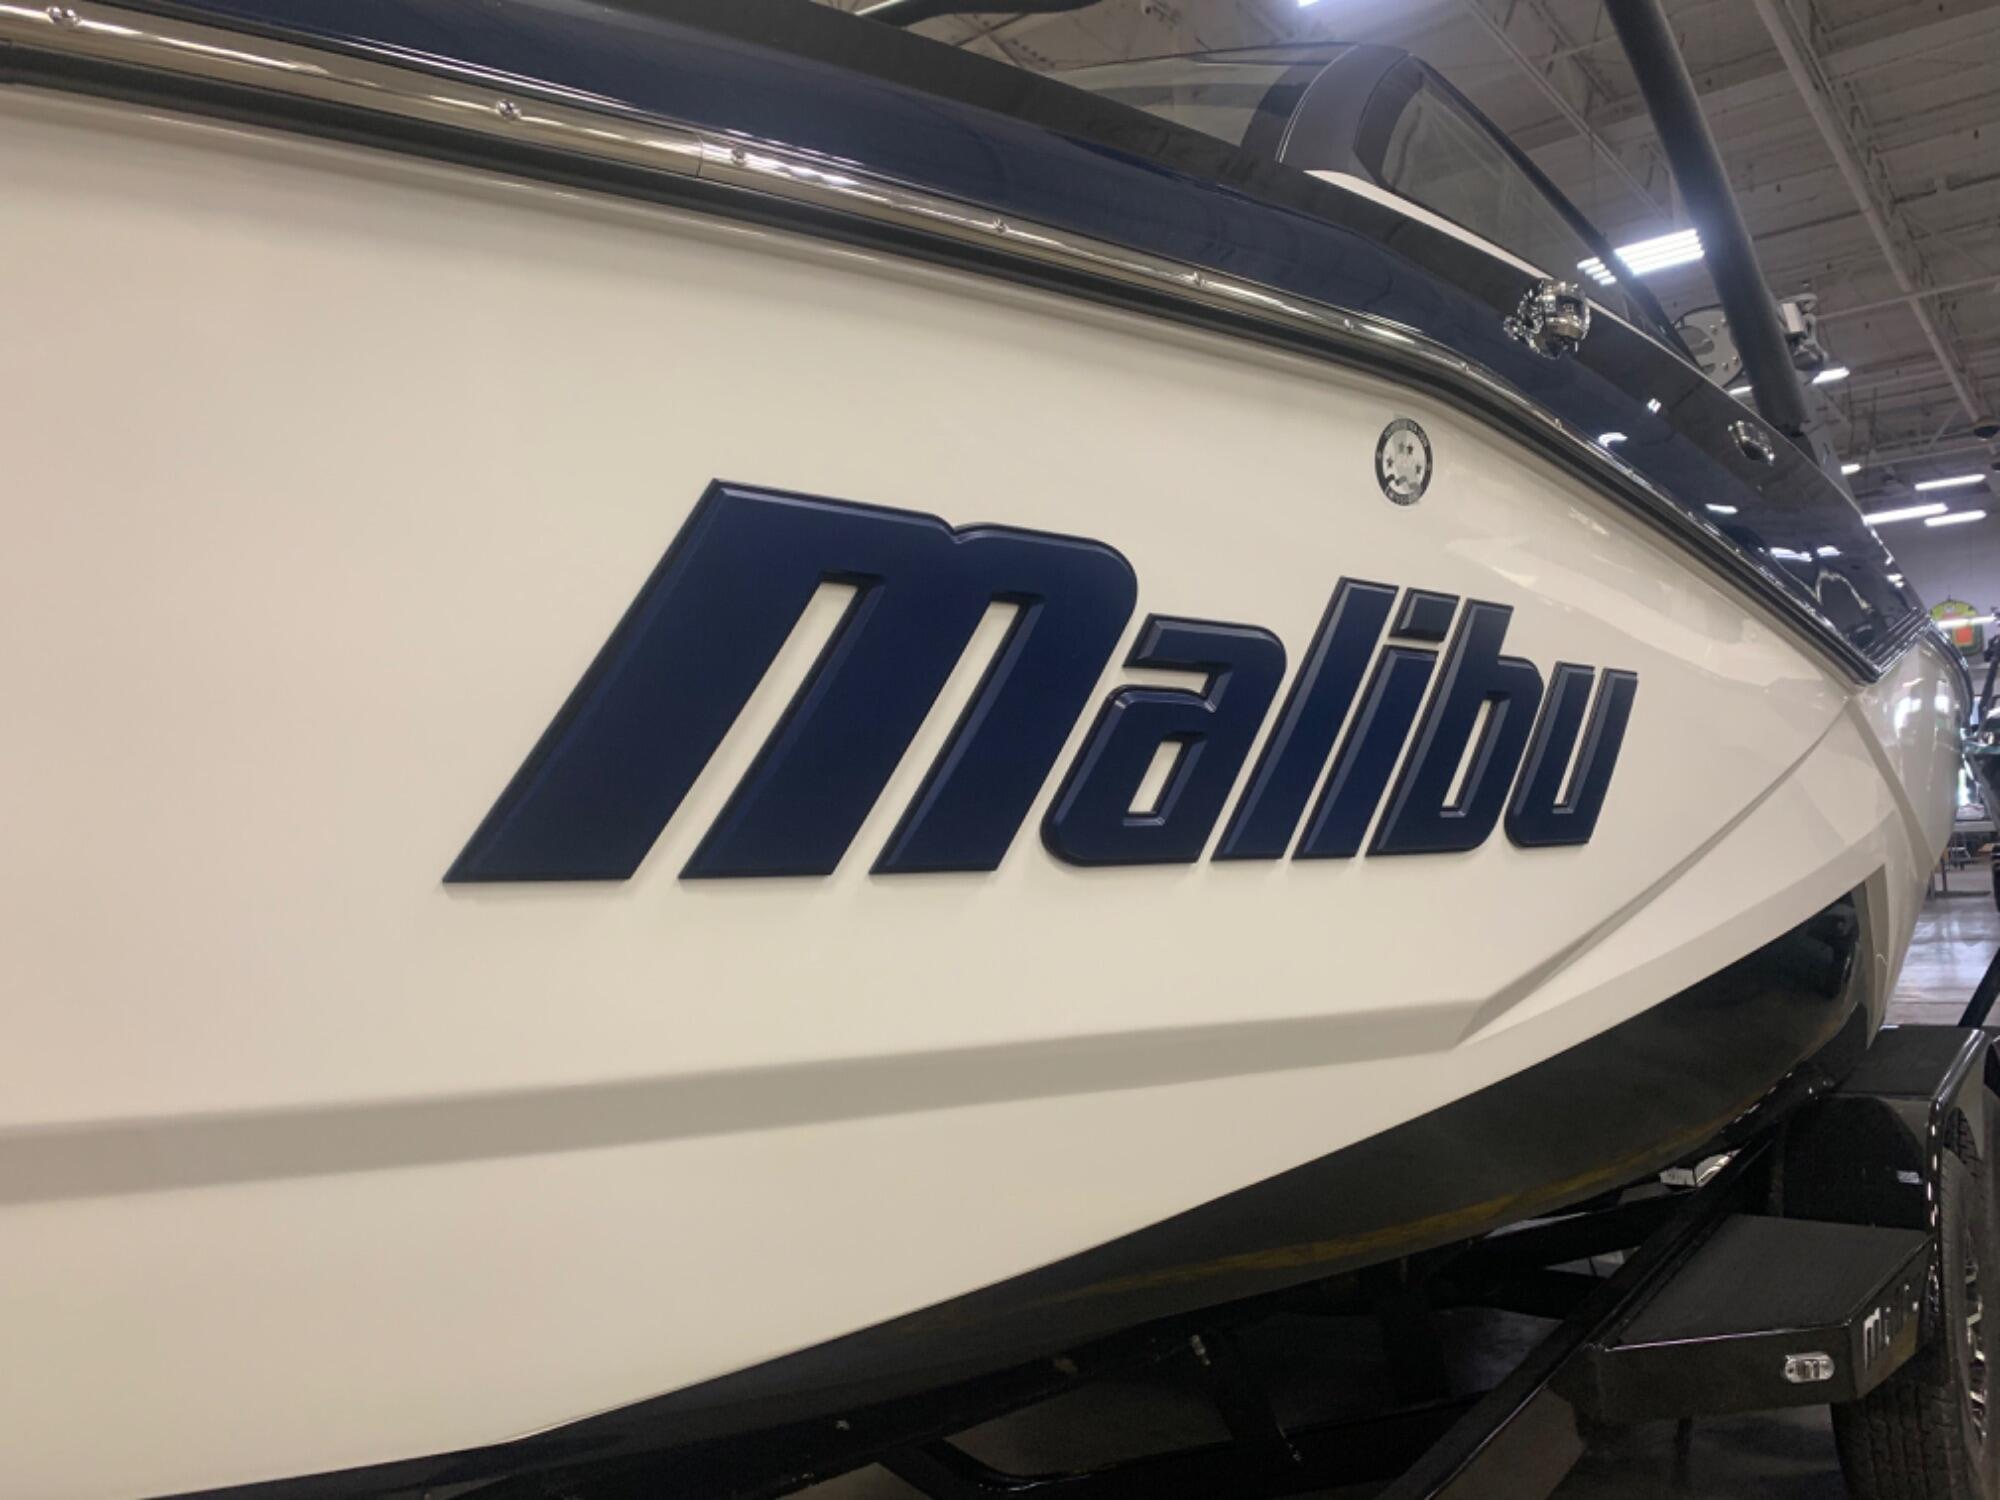 2023 Malibu 22 LSV